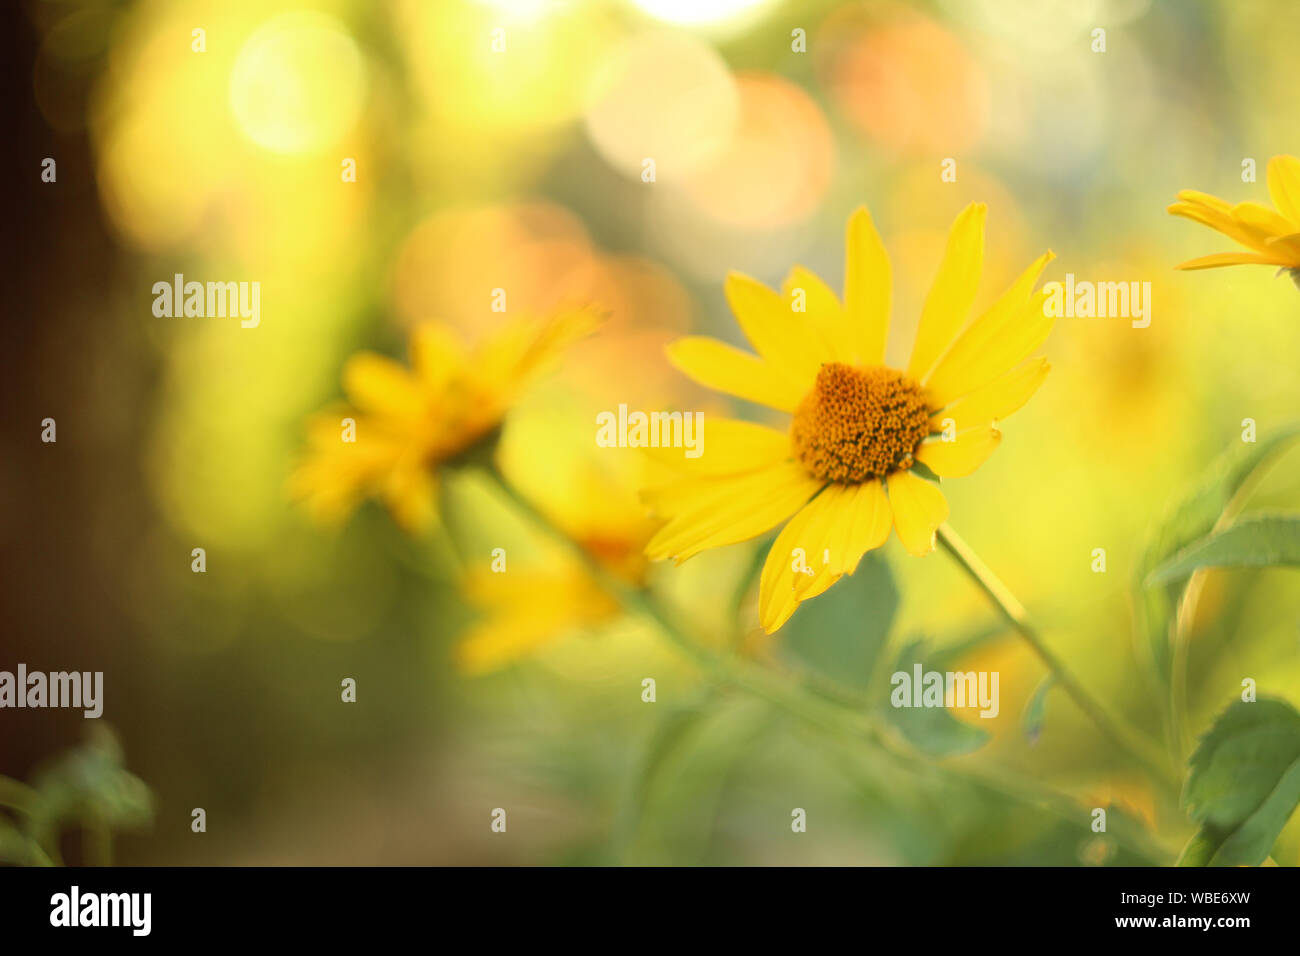 yellow daisy-like flowers at sunset. Blurred background. Stock Photo